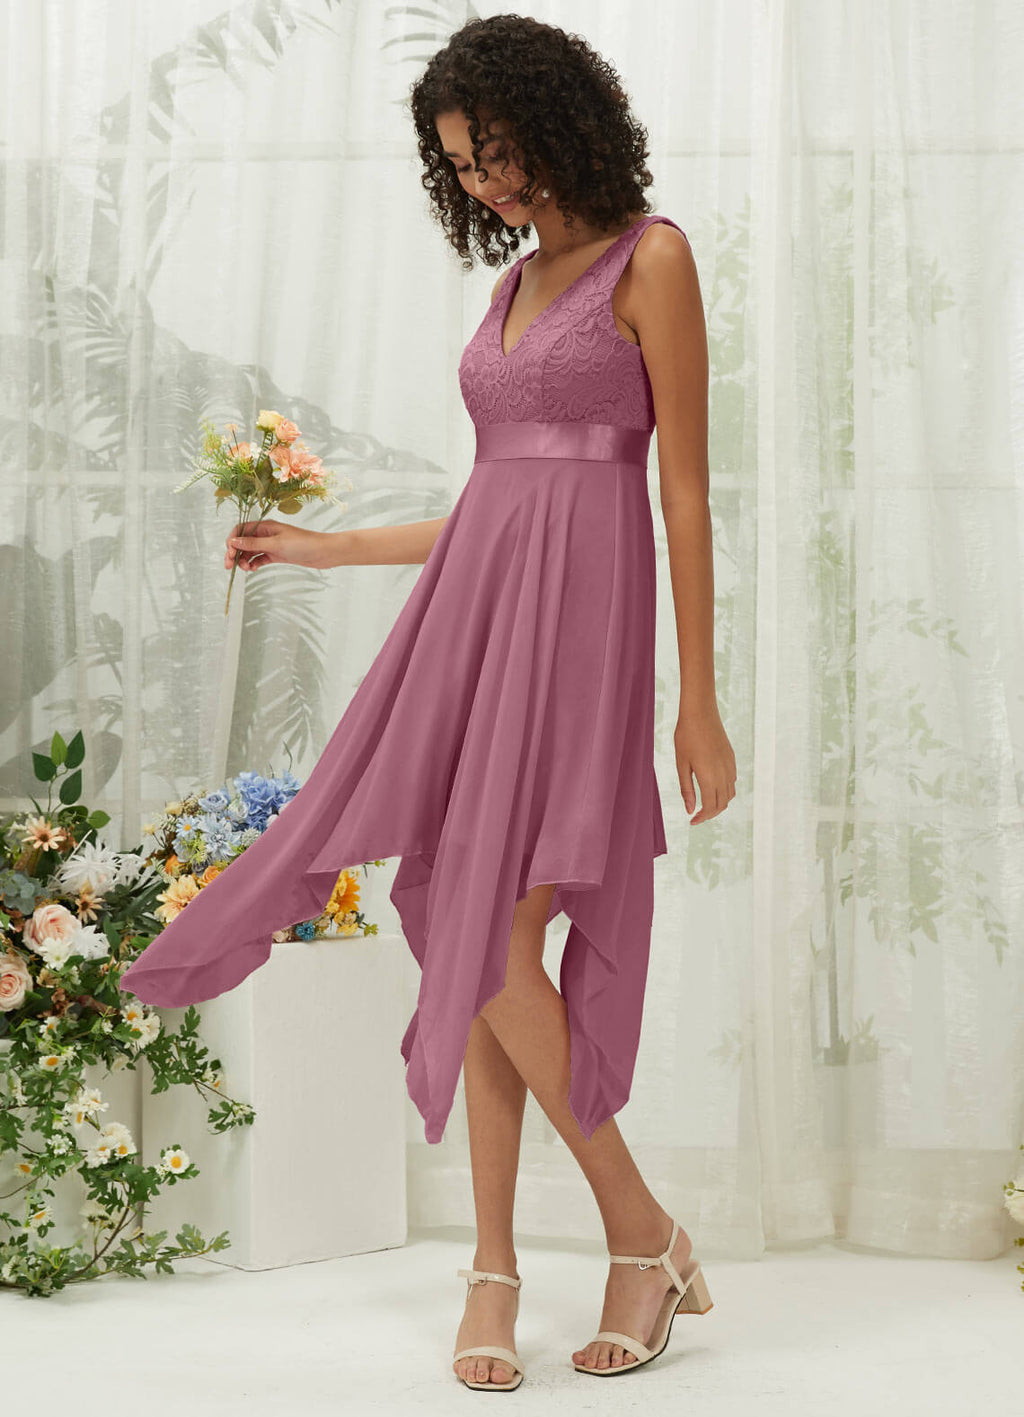 NZ Bridal Dusty Rose Sleeveless Lace Chiffon V Neck bridesmaid dresses 00207ep Evie a